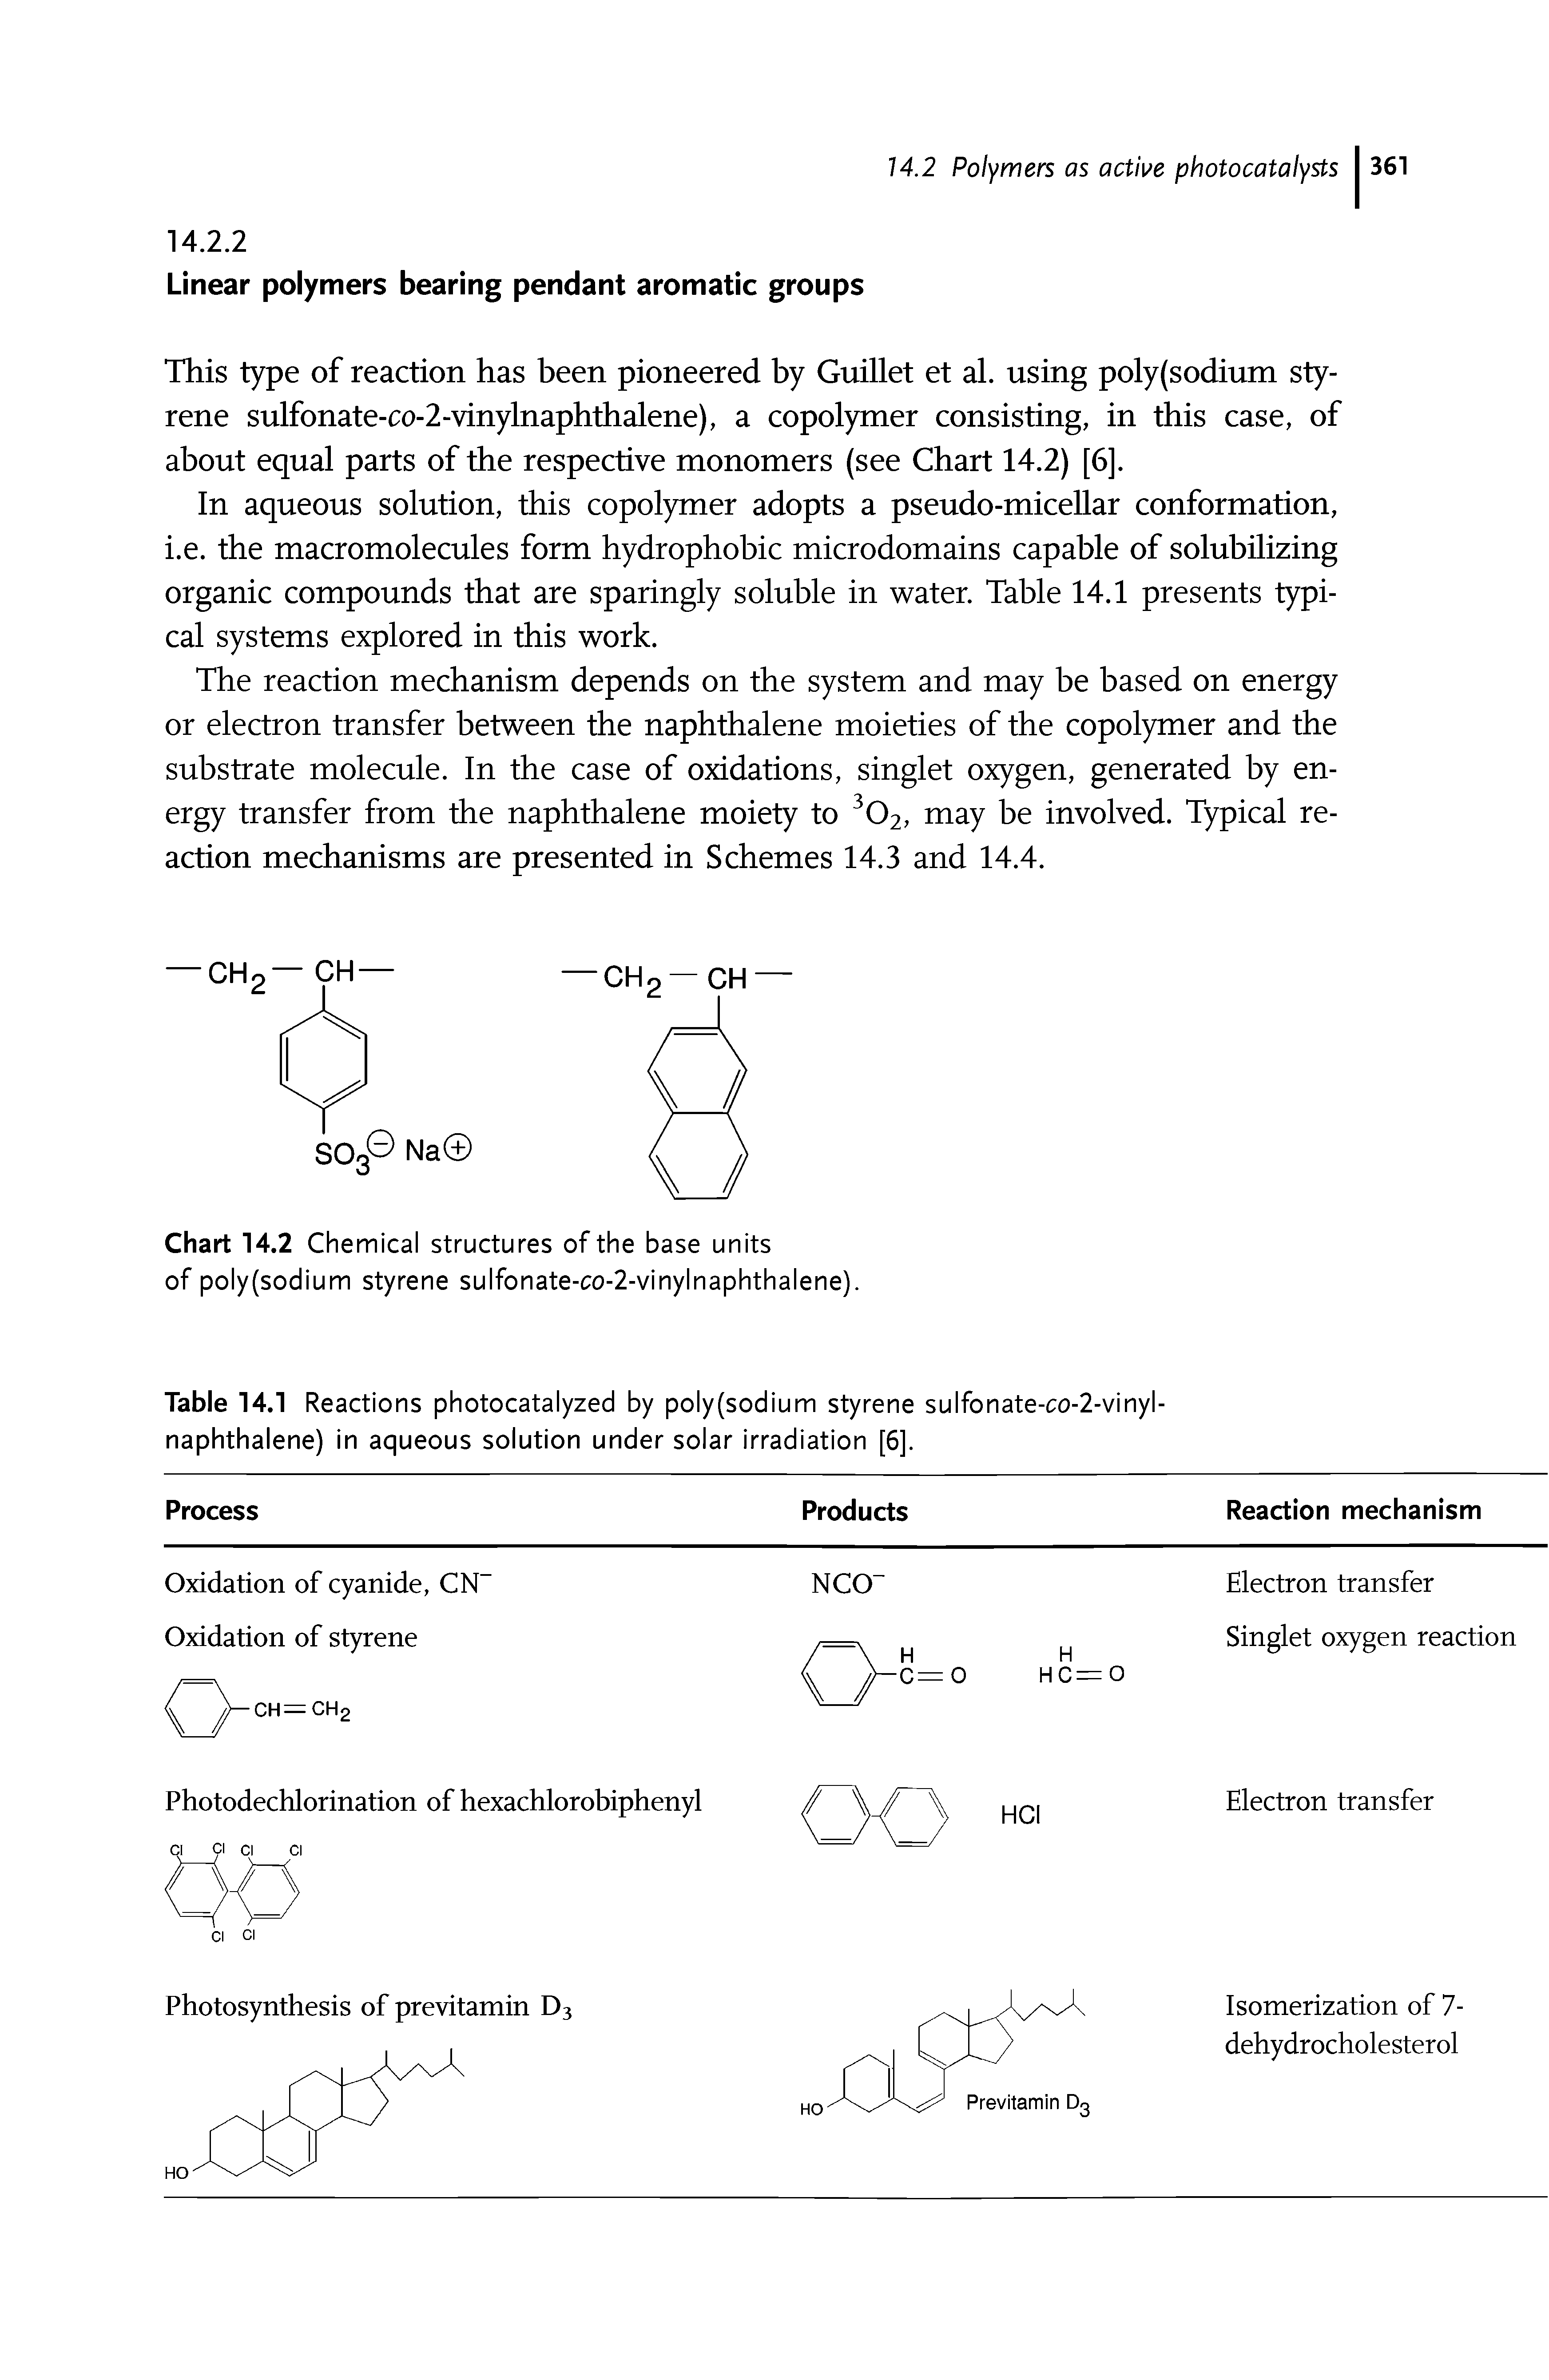 Table 14.1 Reactions photocatalyzed by poly(sodium styrene sulfonate-co-2-vinyl-naphthalene) in aqueous solution under solar irradiation [6].